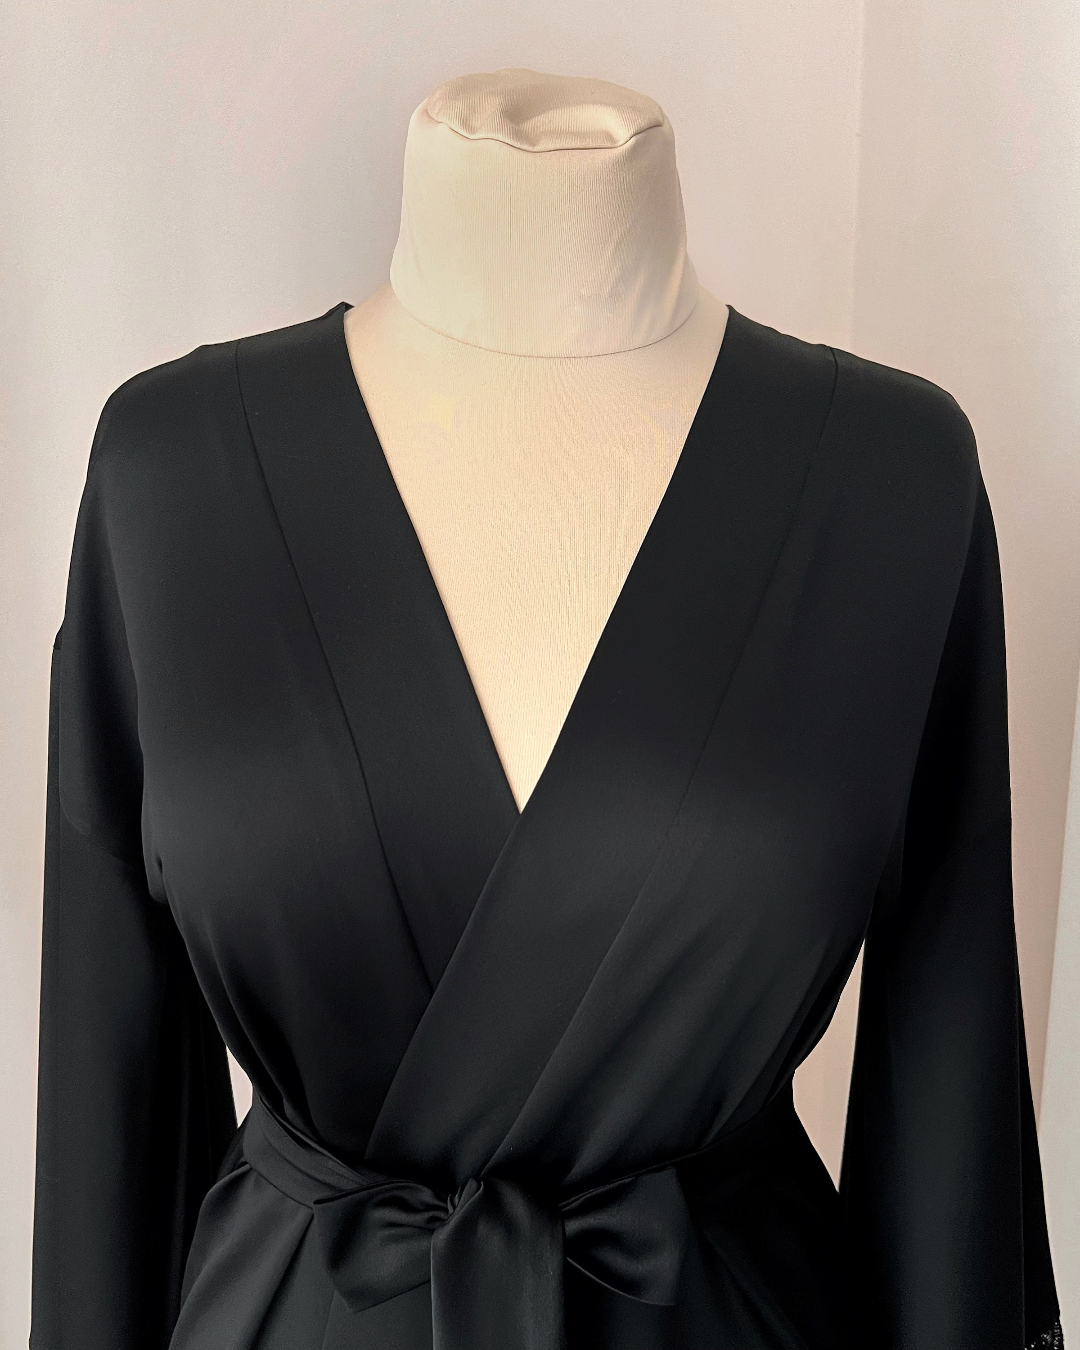 a woman's black dress on a mannequin